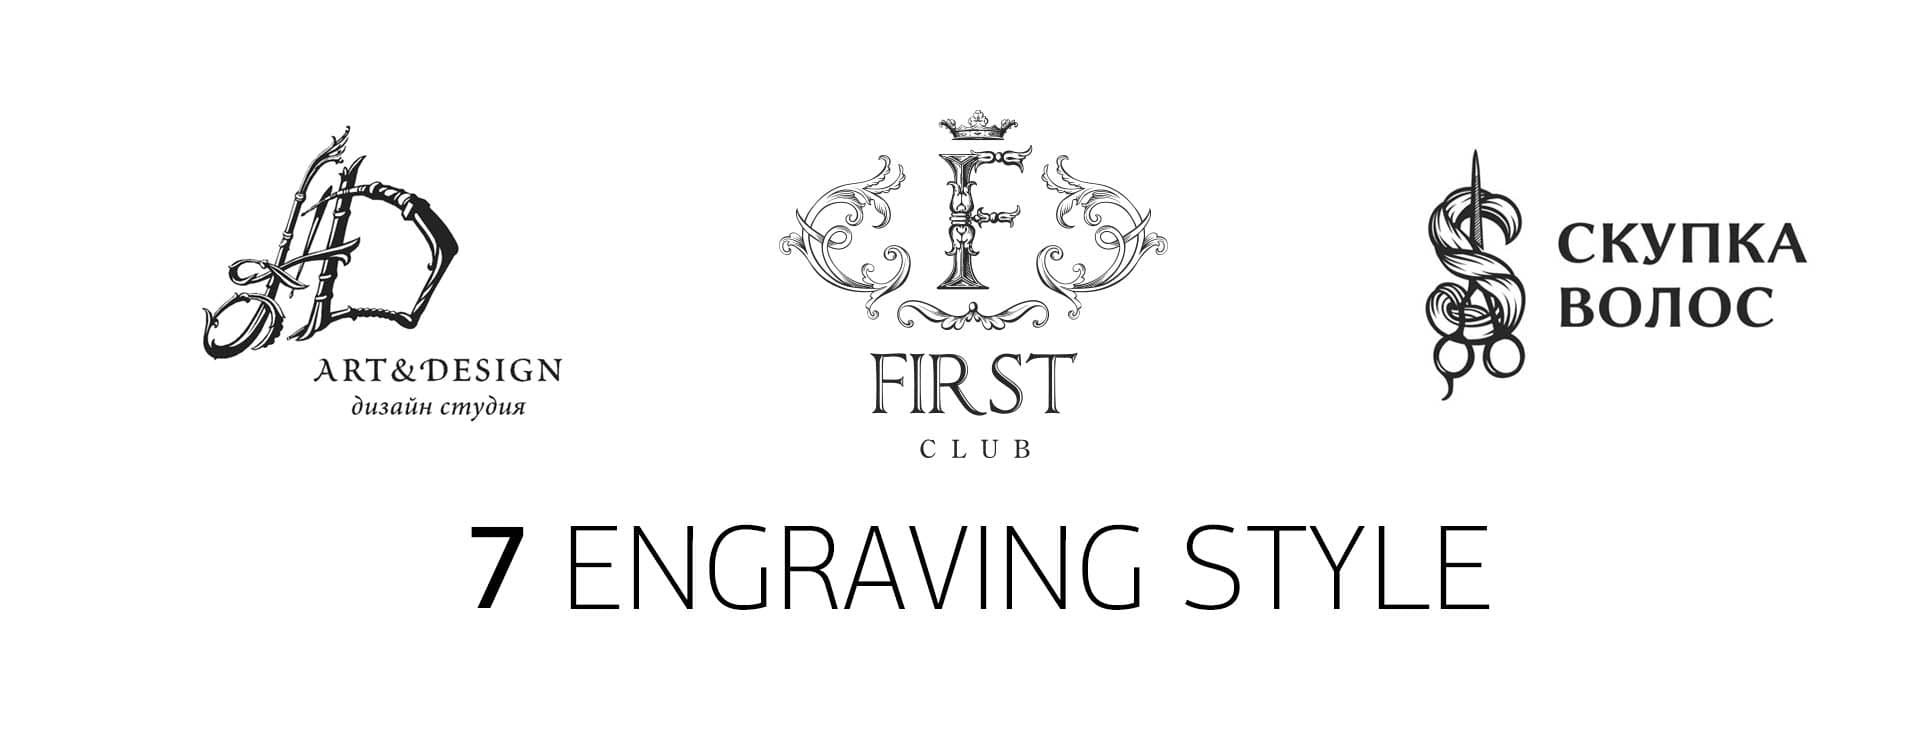 гравюра стиль логотипа engraving logo style